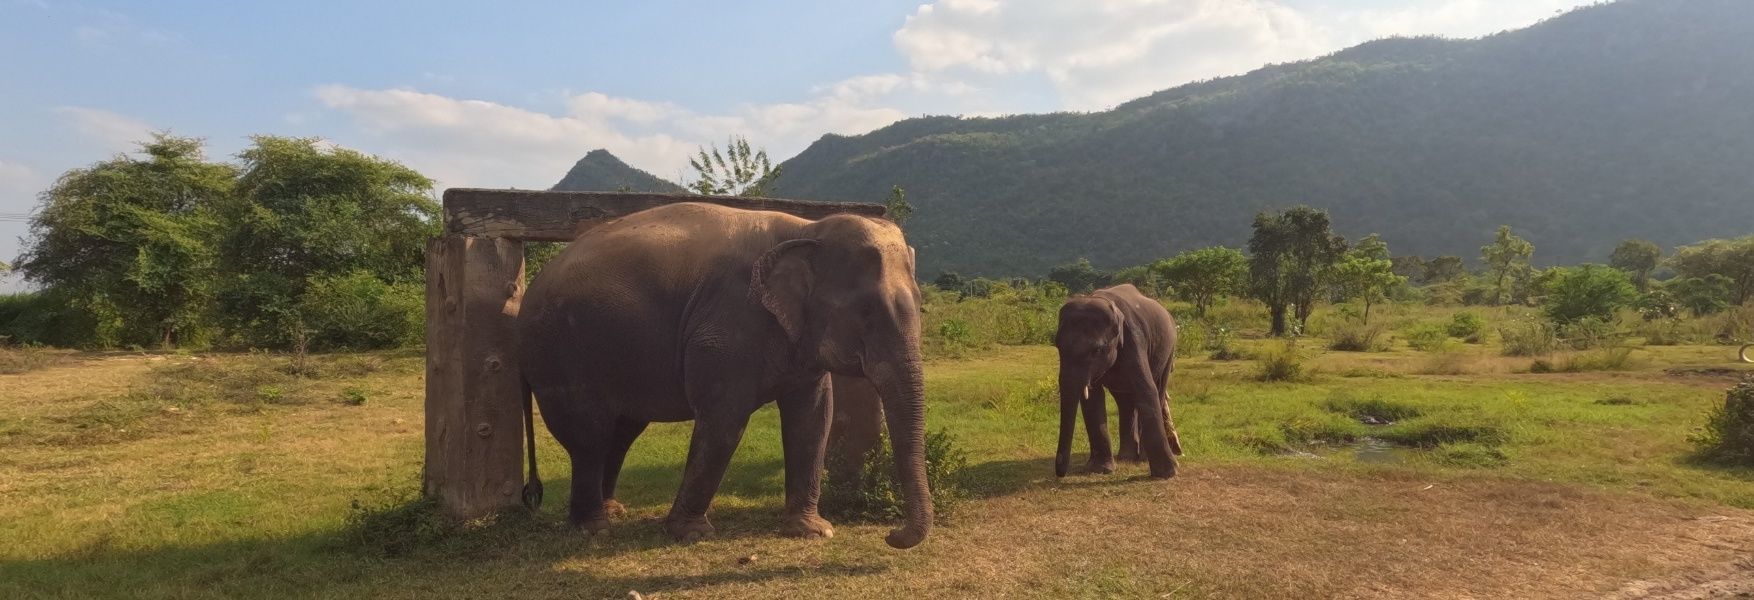 elephant sanctuary near bangkok